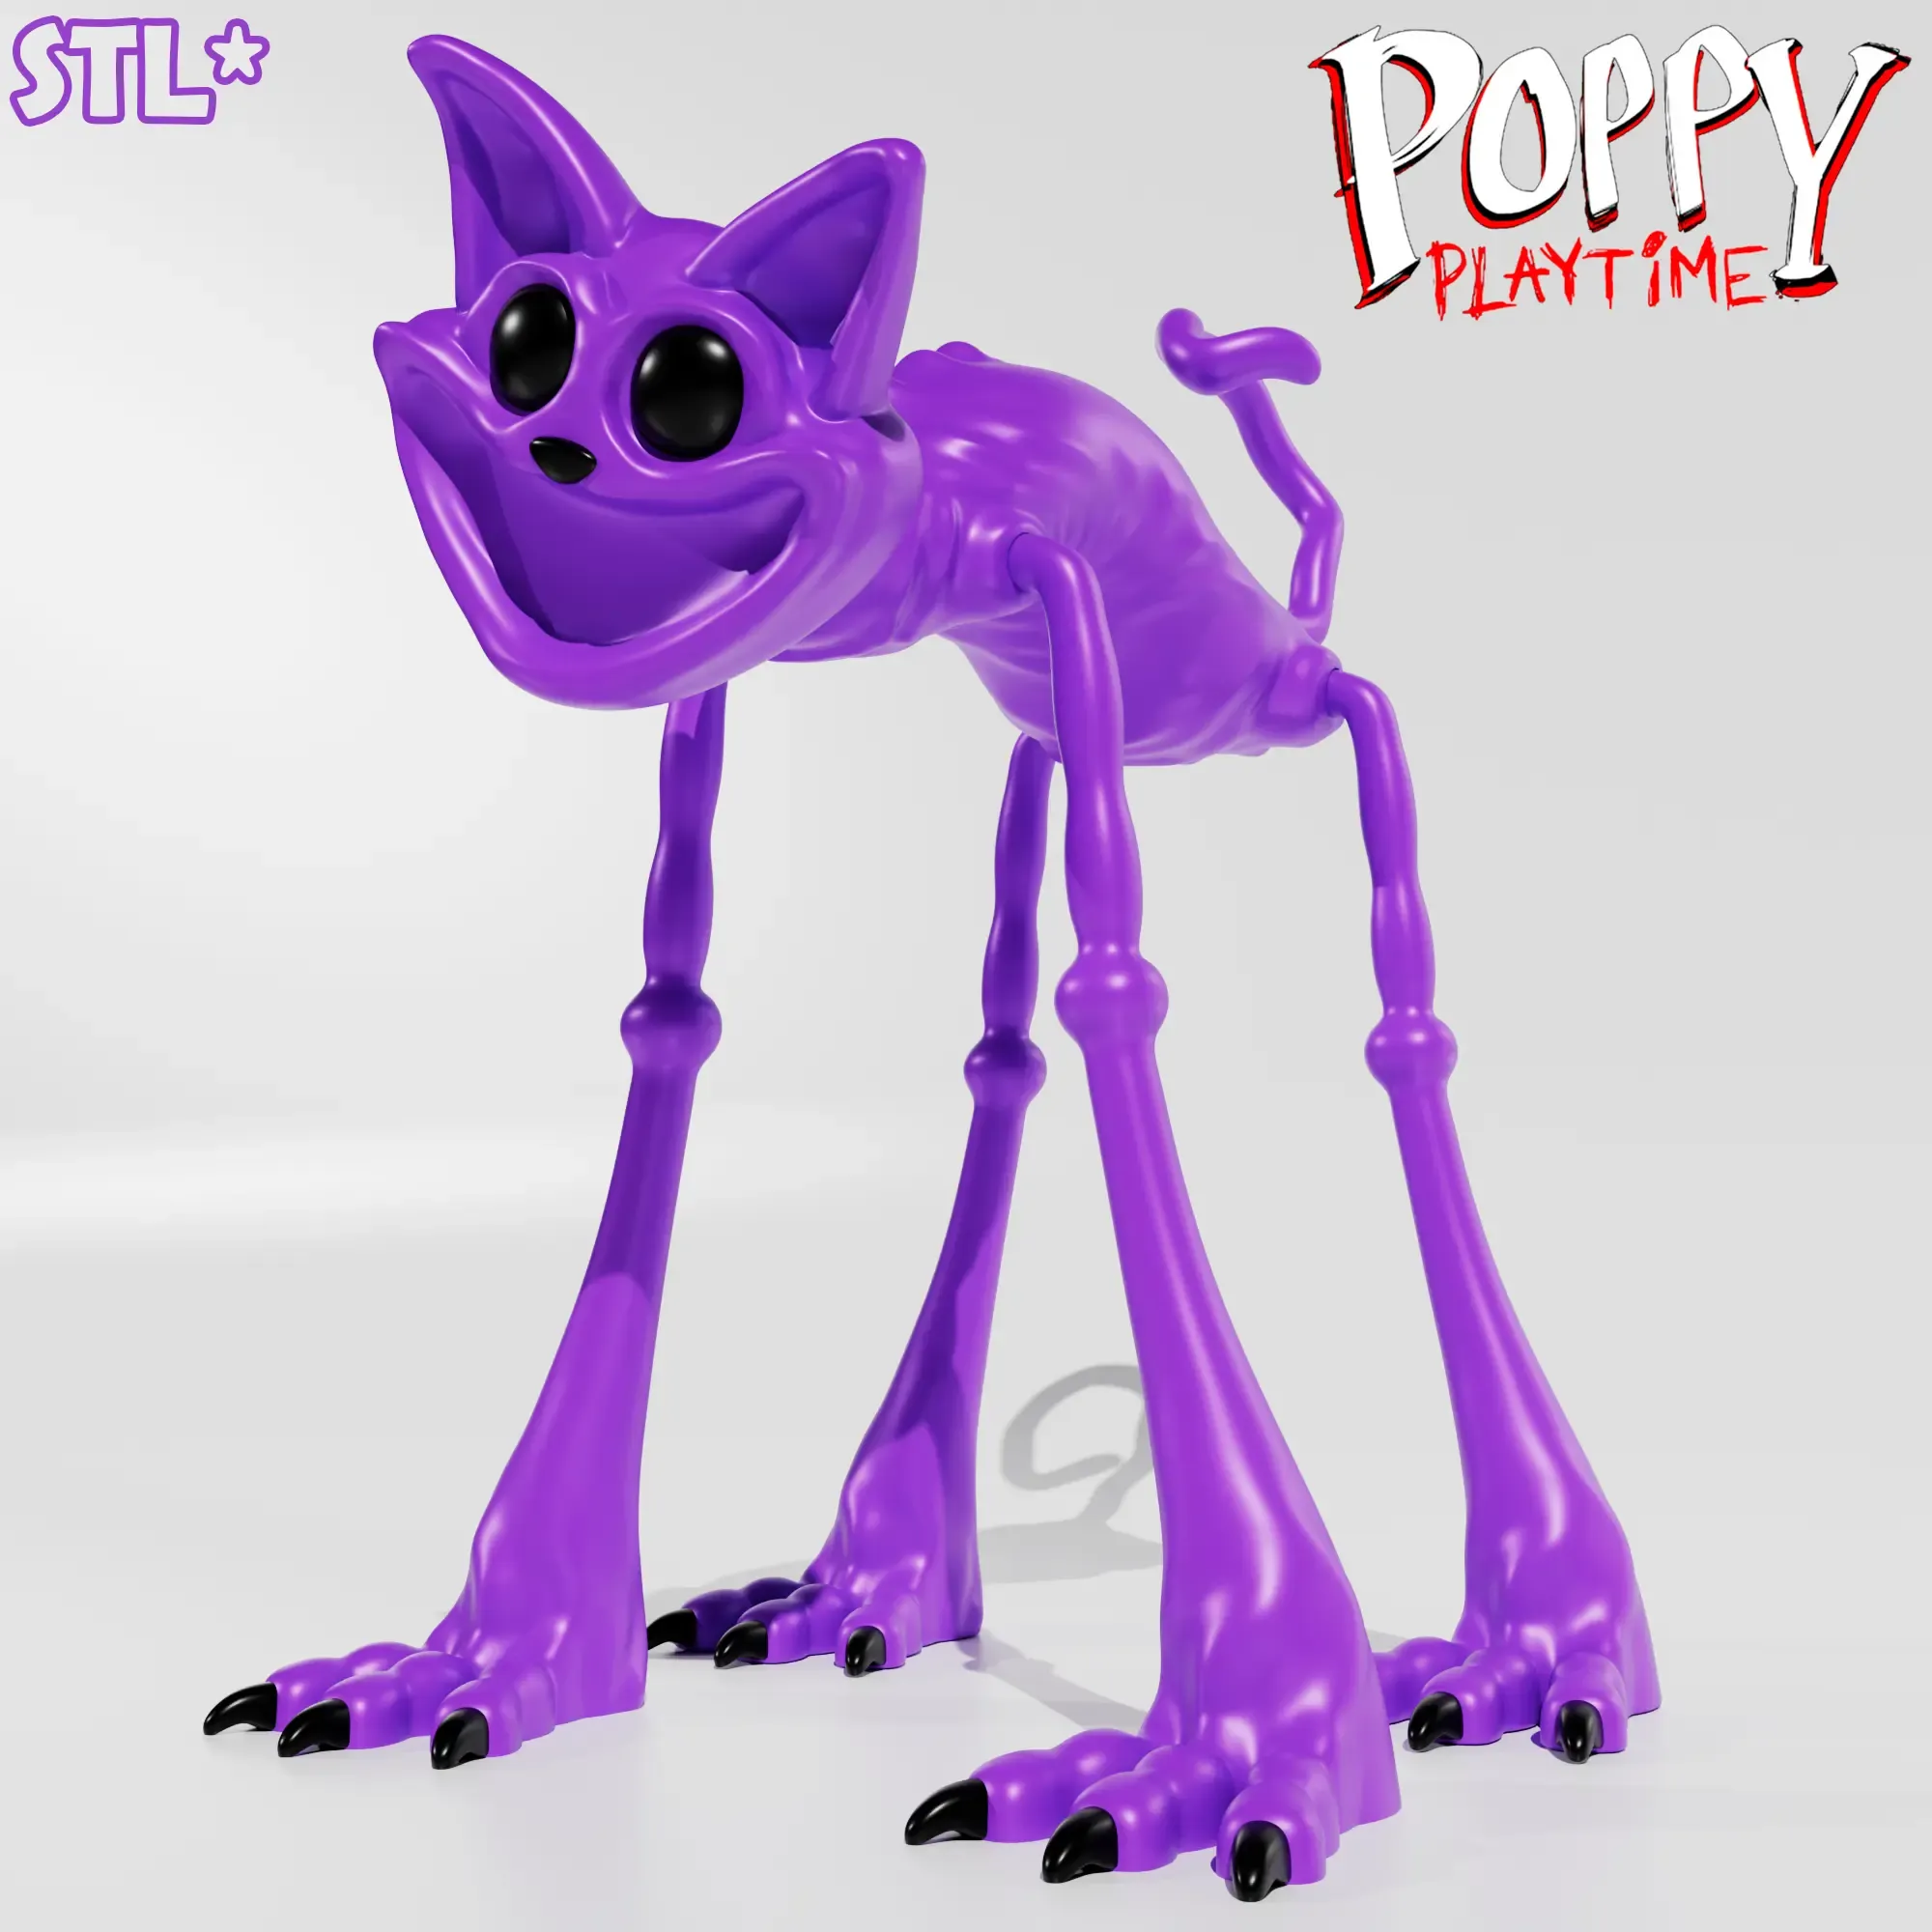 CATNAP - POPPY PLAYTIME 3 | 3D PRINT MODEL - FAN ART Cat Nap